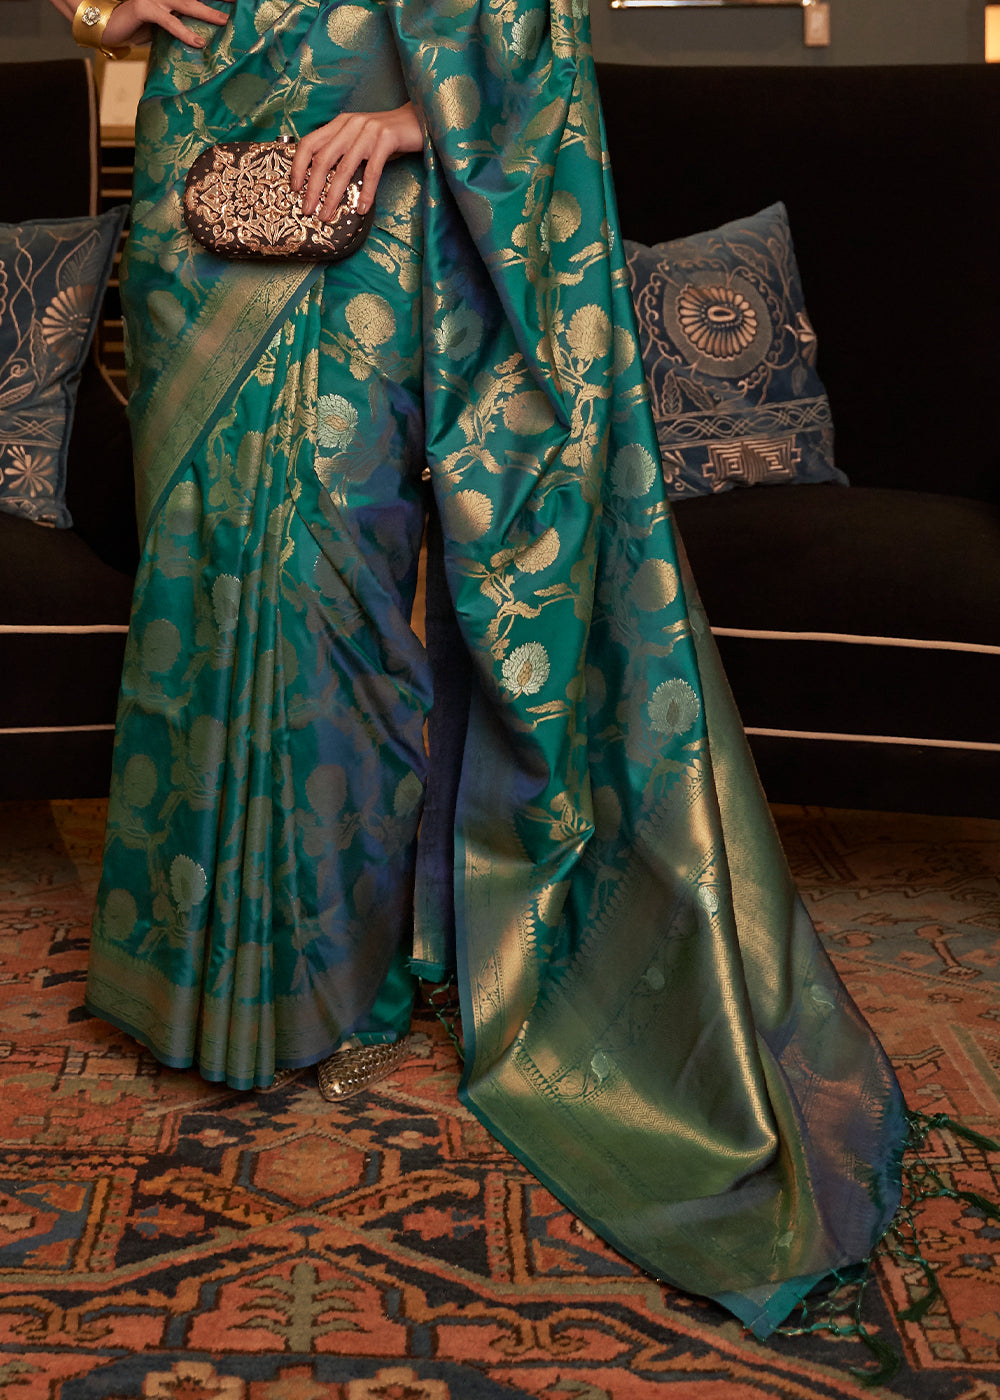 Pine Green Woven Banarasi Silk Saree with Tassels on Pallu - Colorful Saree